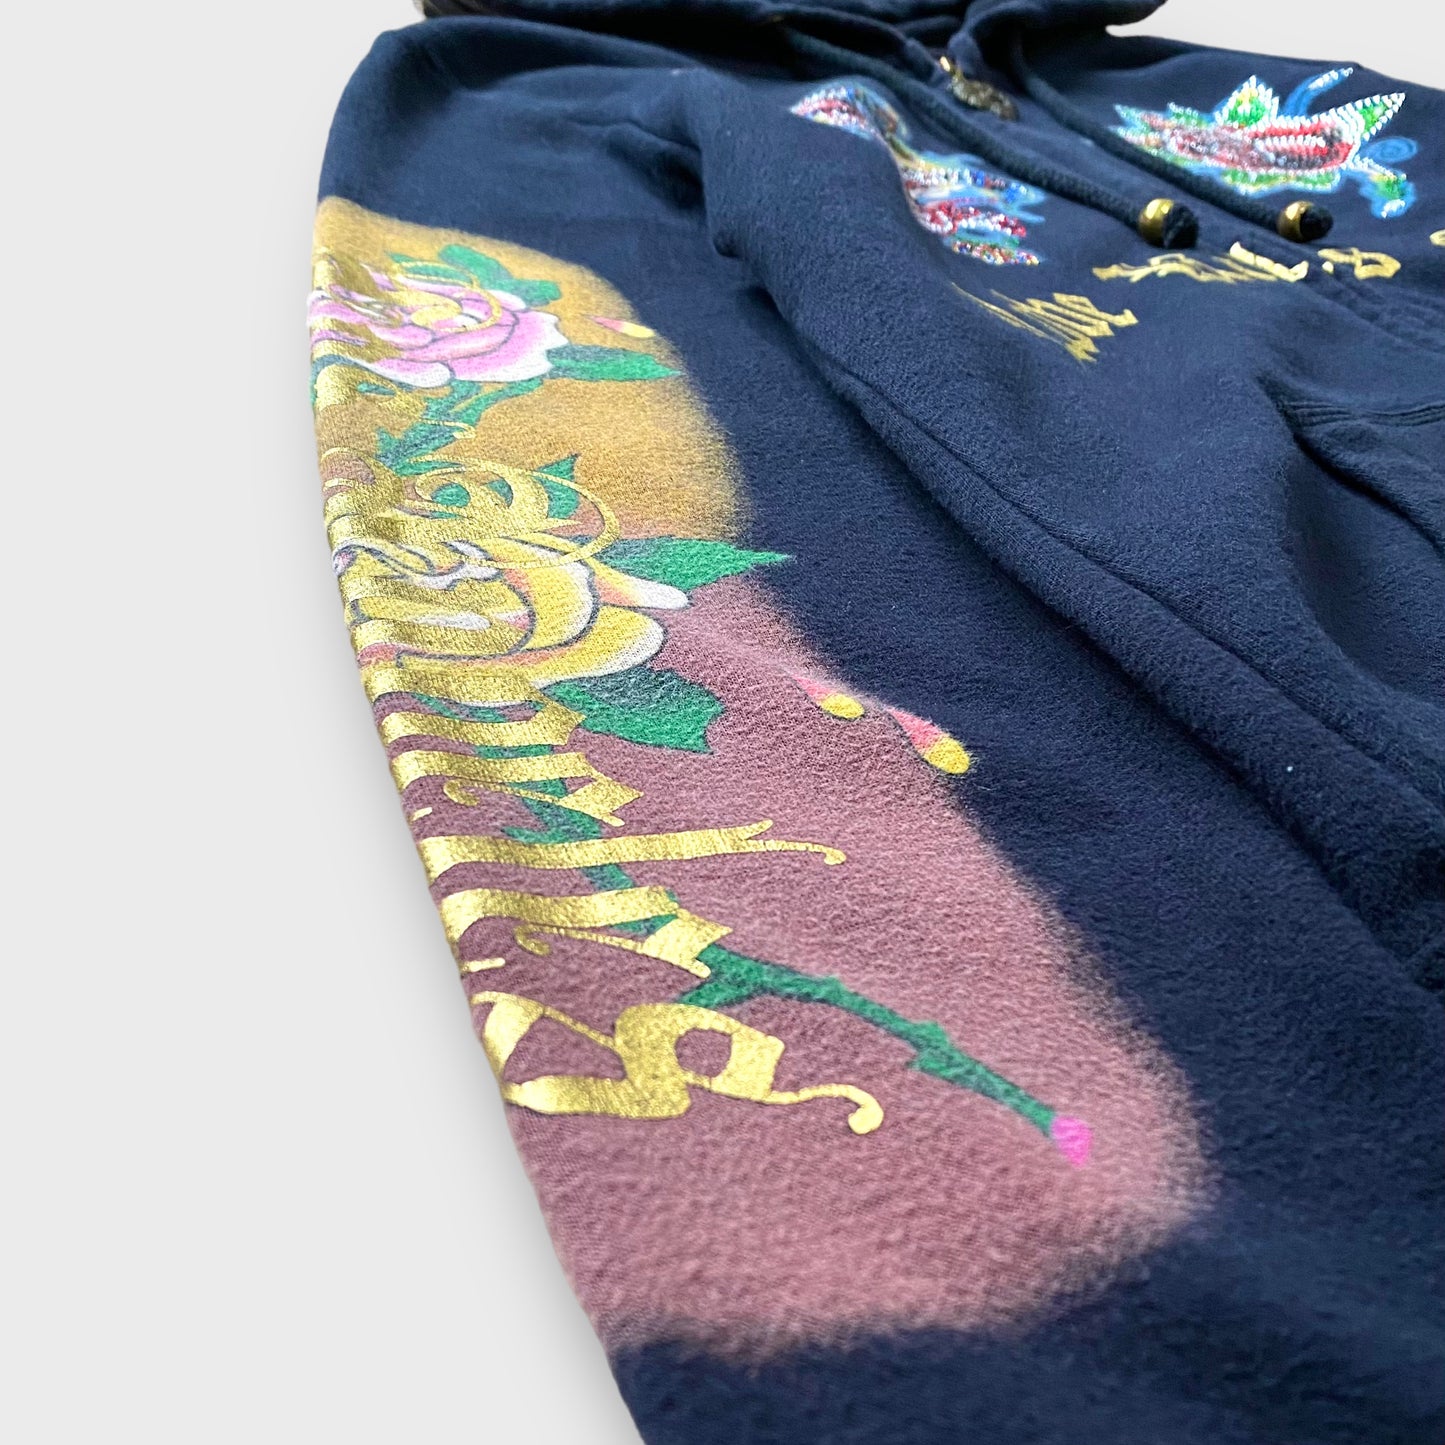 "Ed Hardy" Icon design full zip hoodie